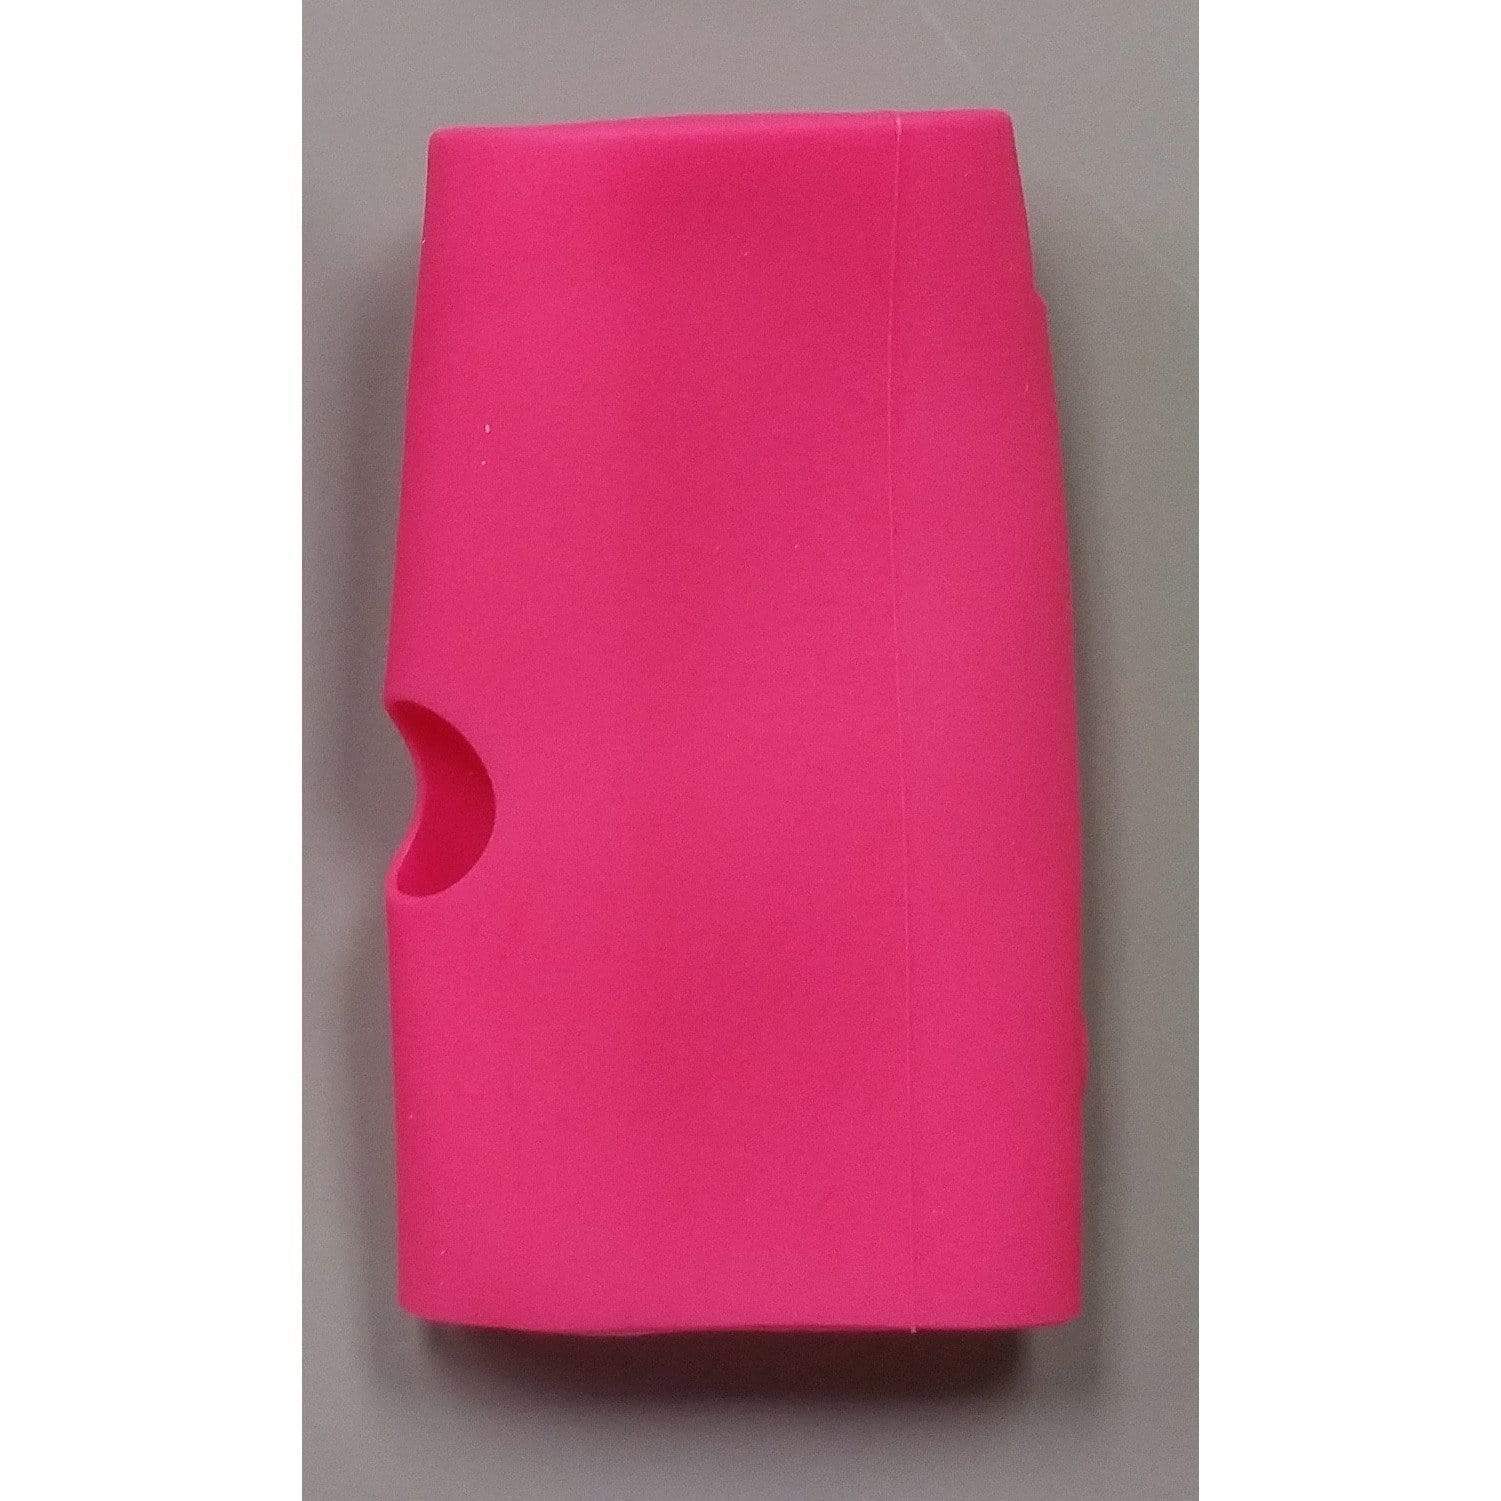 Silicone Sleeve Case for KBOX Mini Fushia Silicone Cases